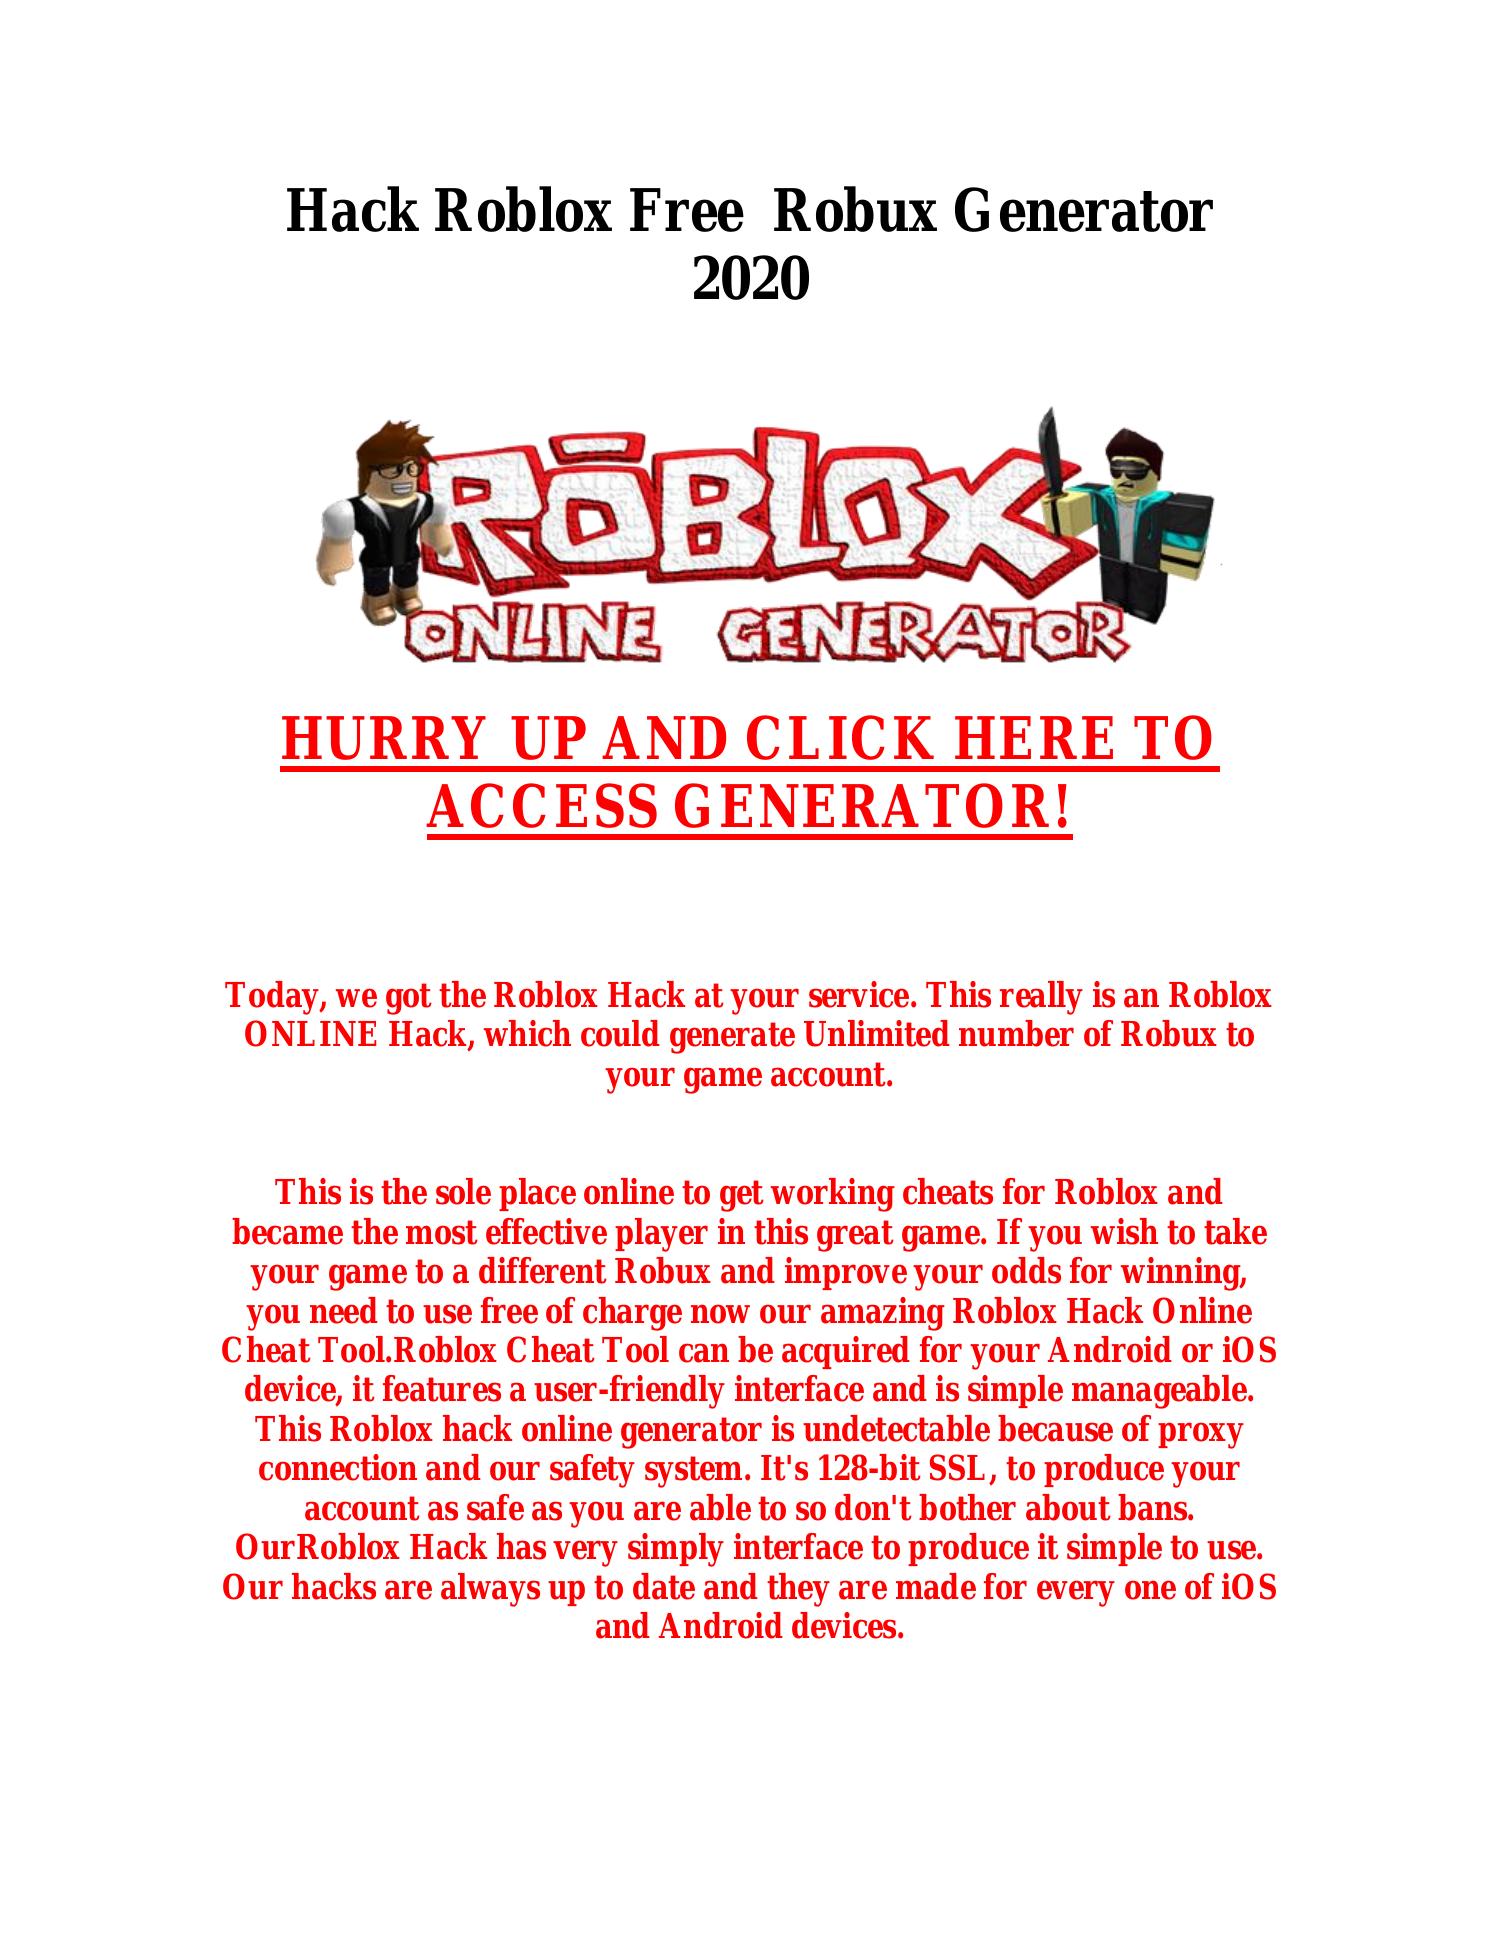 Hack Roblox Free Robux Generator 2020 Converted Pdf Docdroid - roblox poster creator hacki w roblox